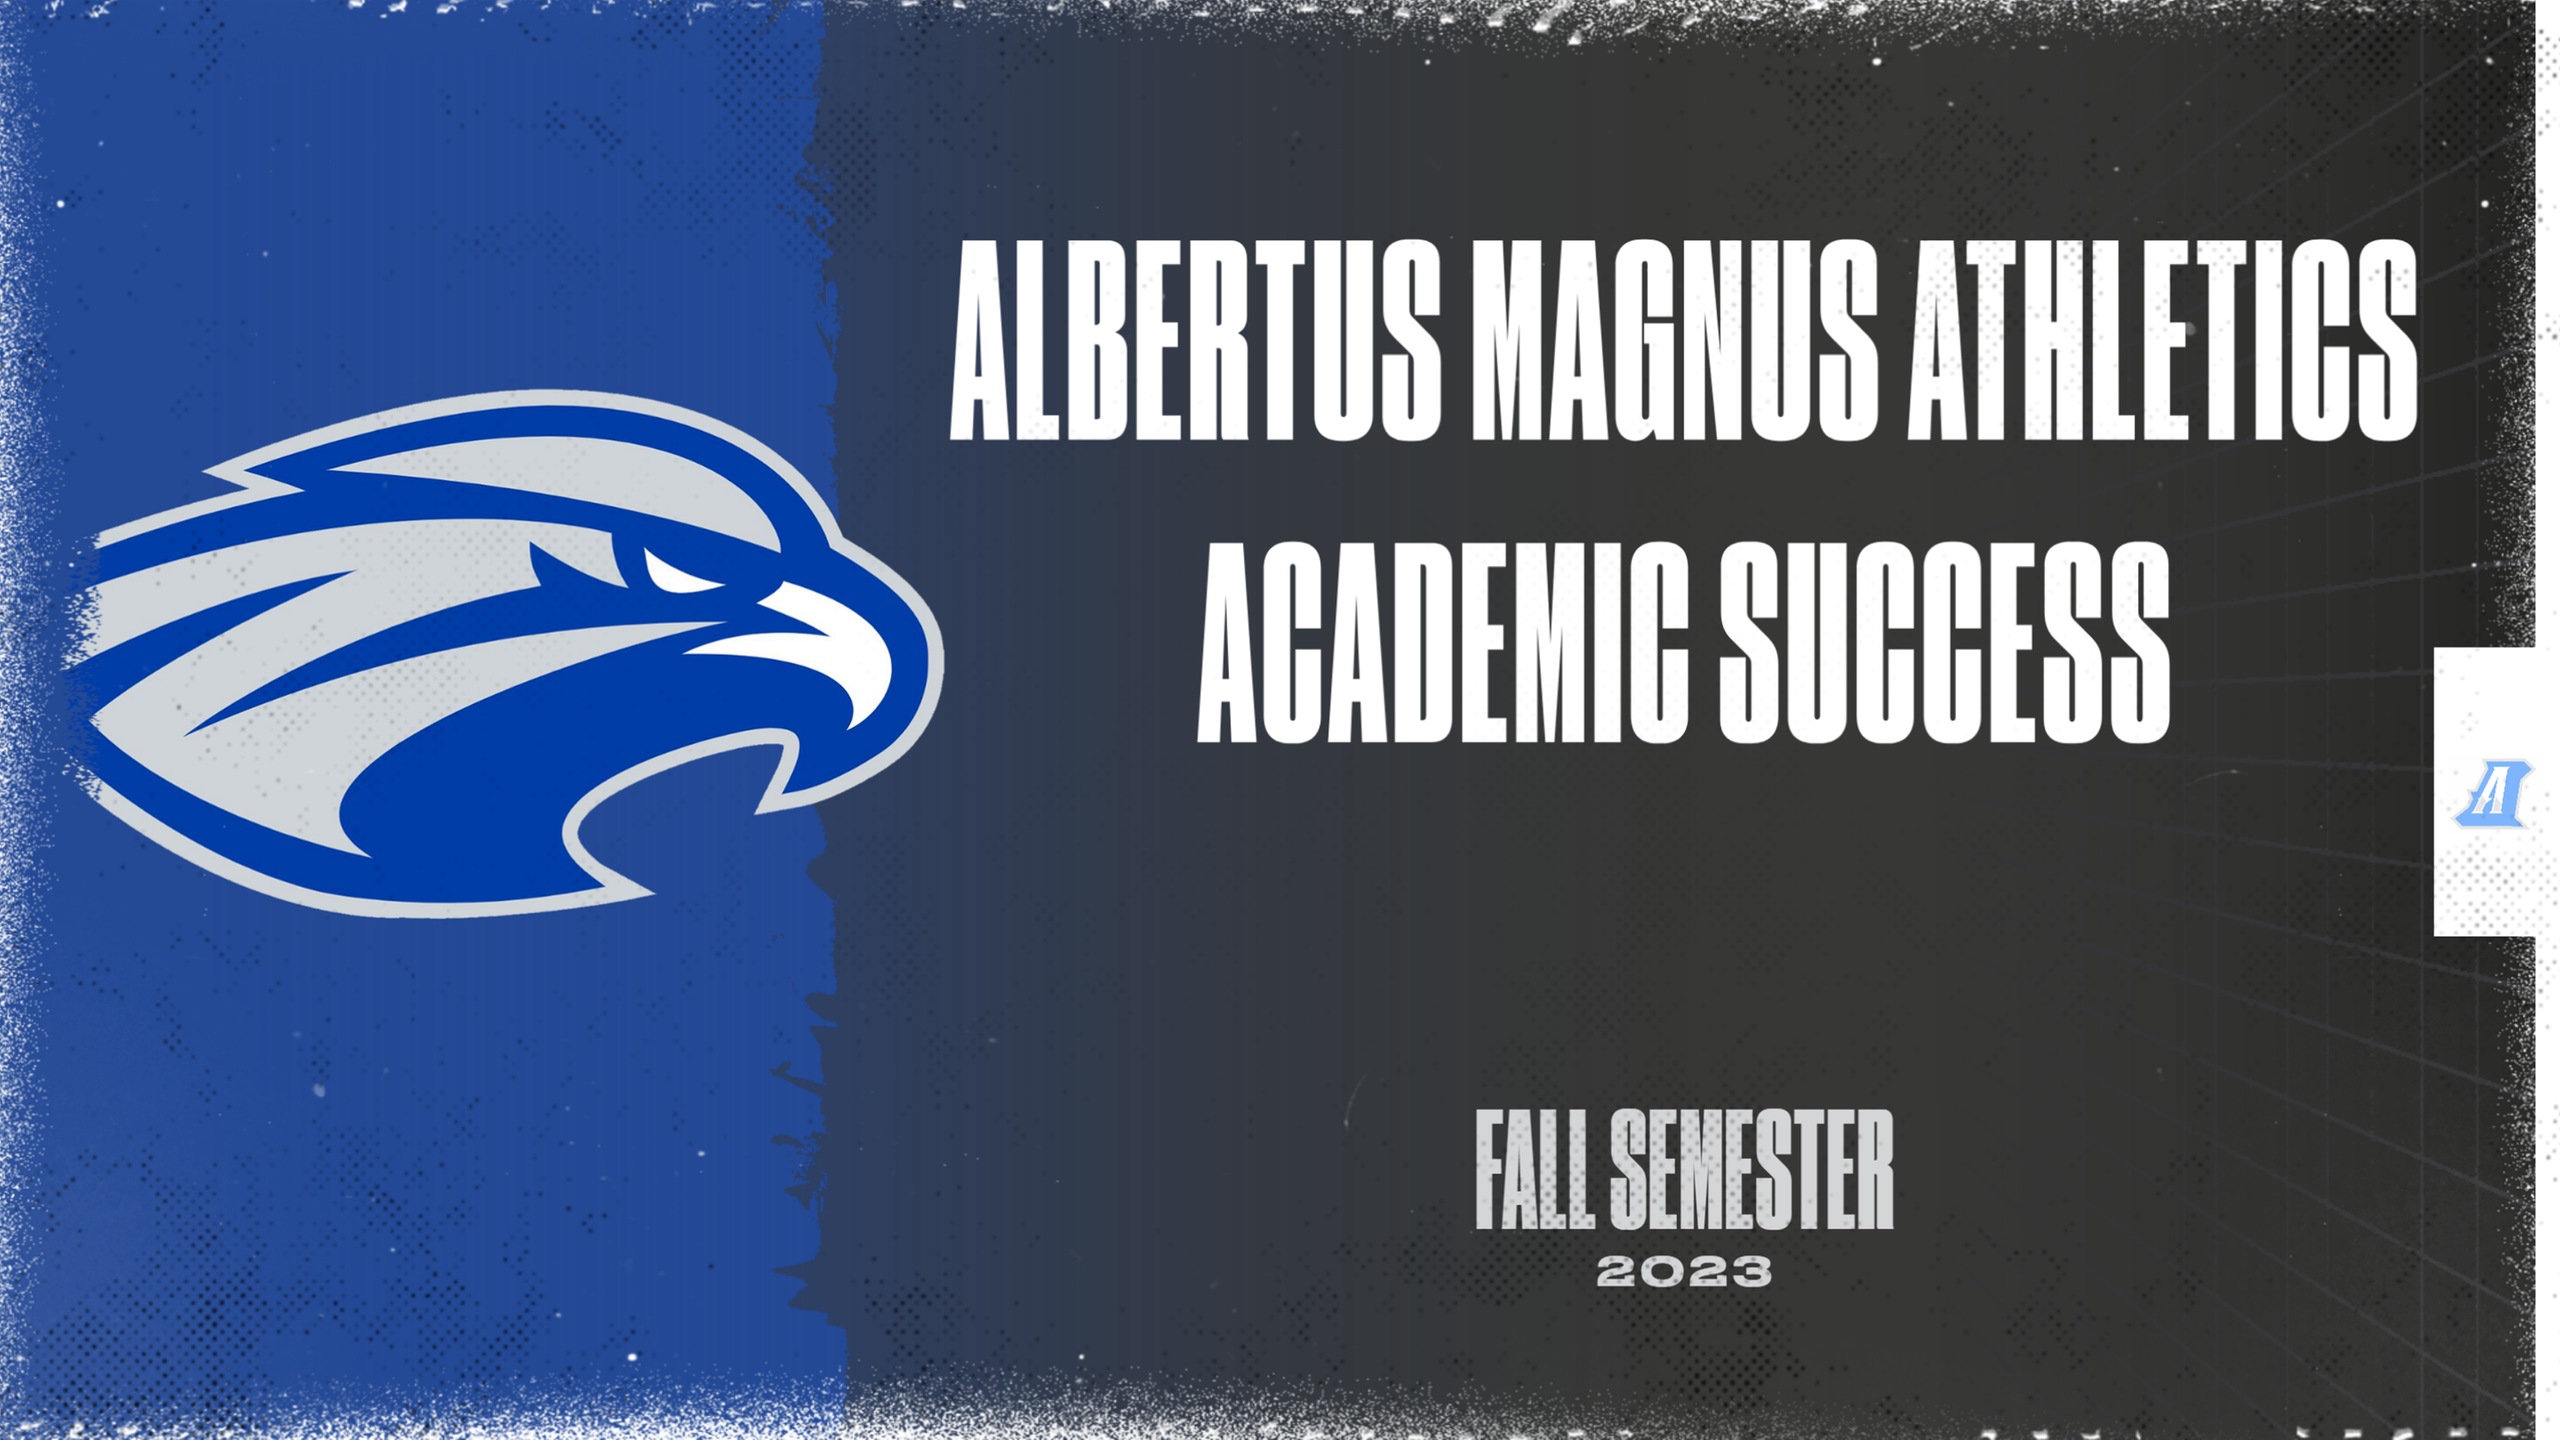 Albertus Athletics Announces Academic Success for Fall, 2023 Semester